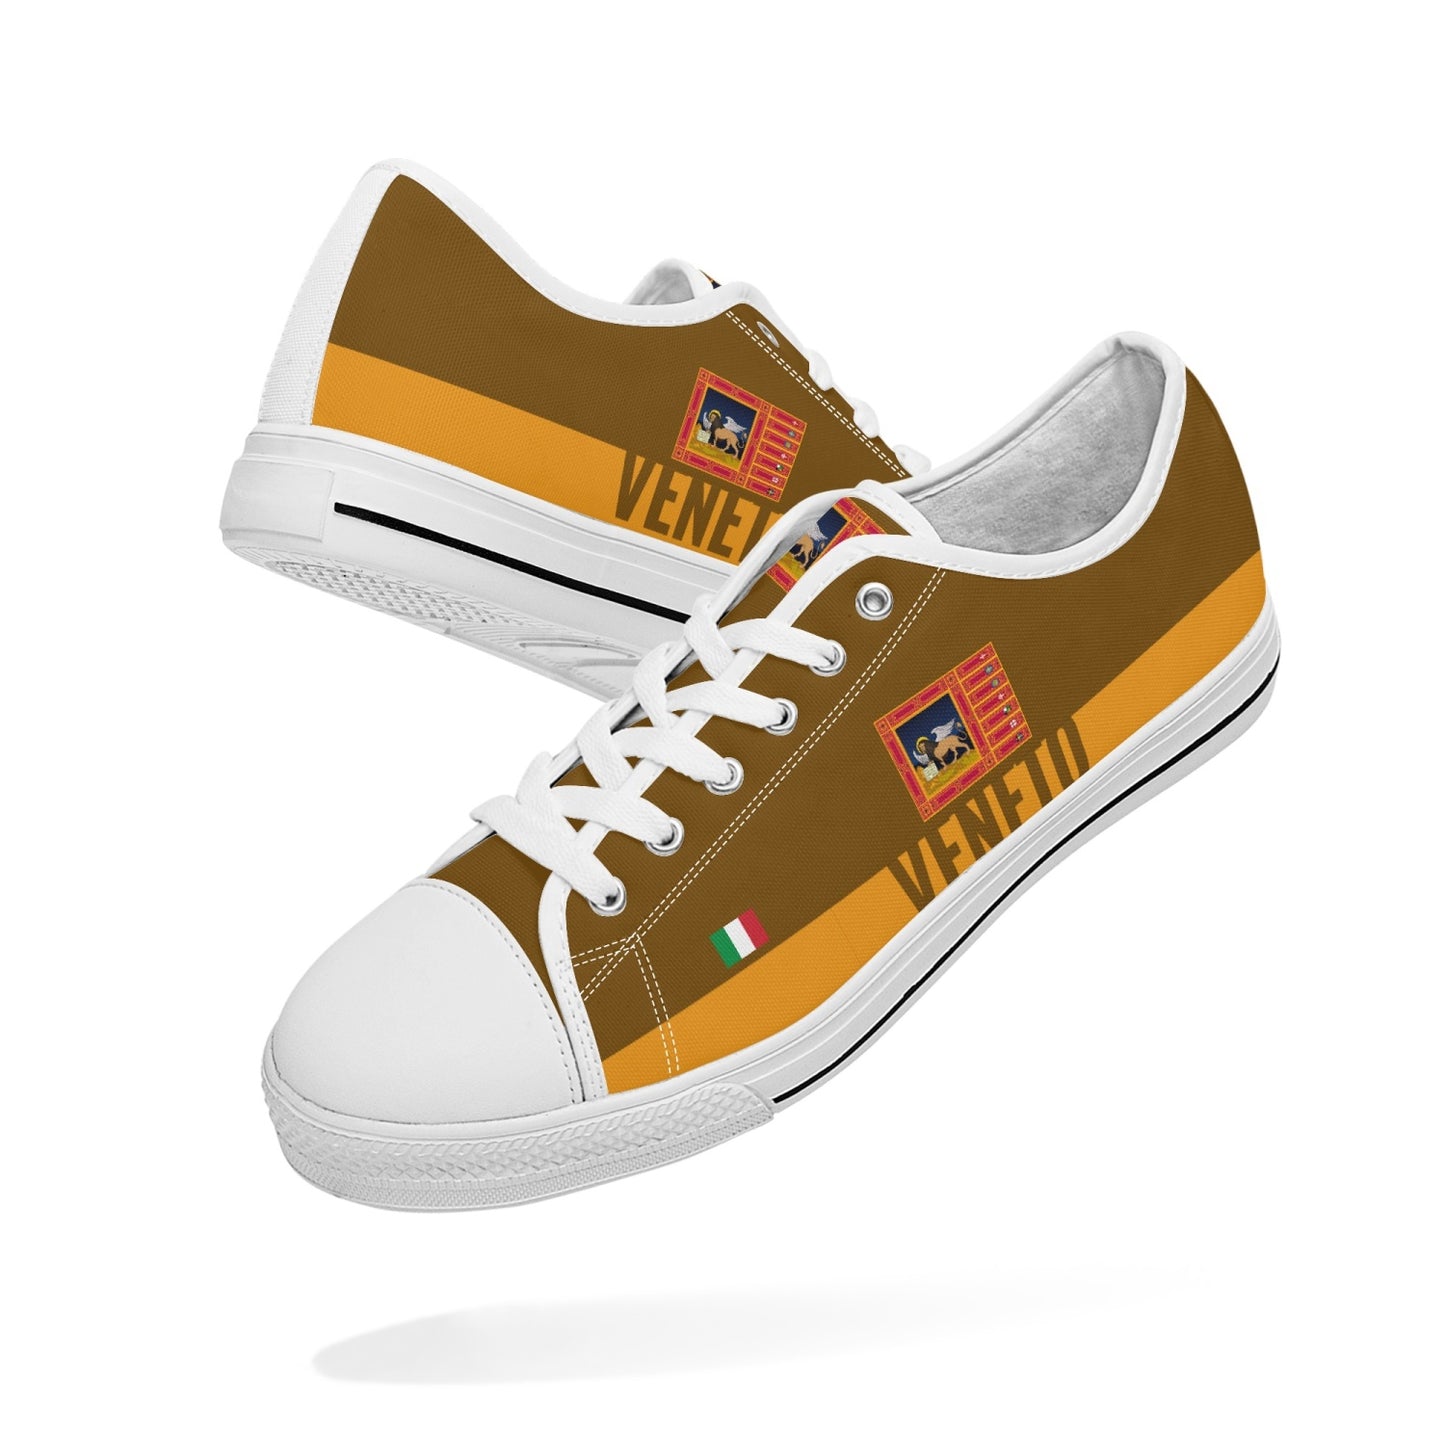 Veneto Shoes Low-top V2